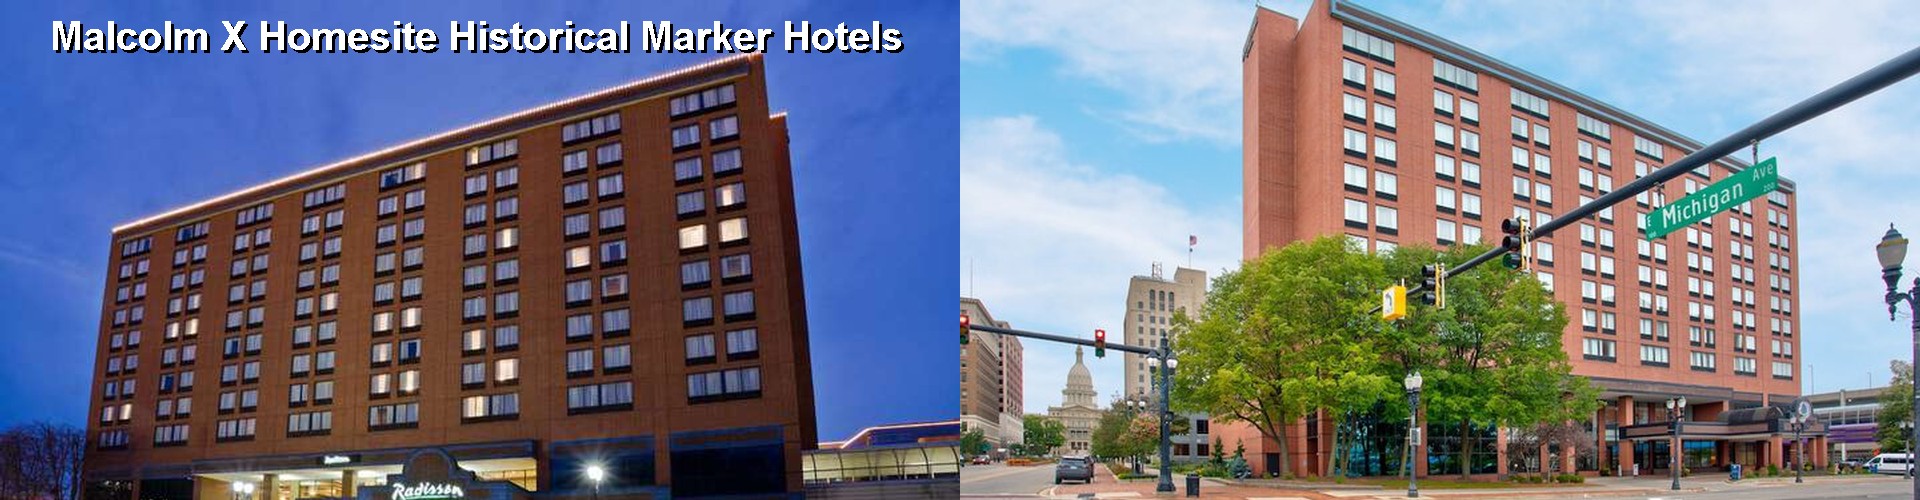 5 Best Hotels near Malcolm X Homesite Historical Marker